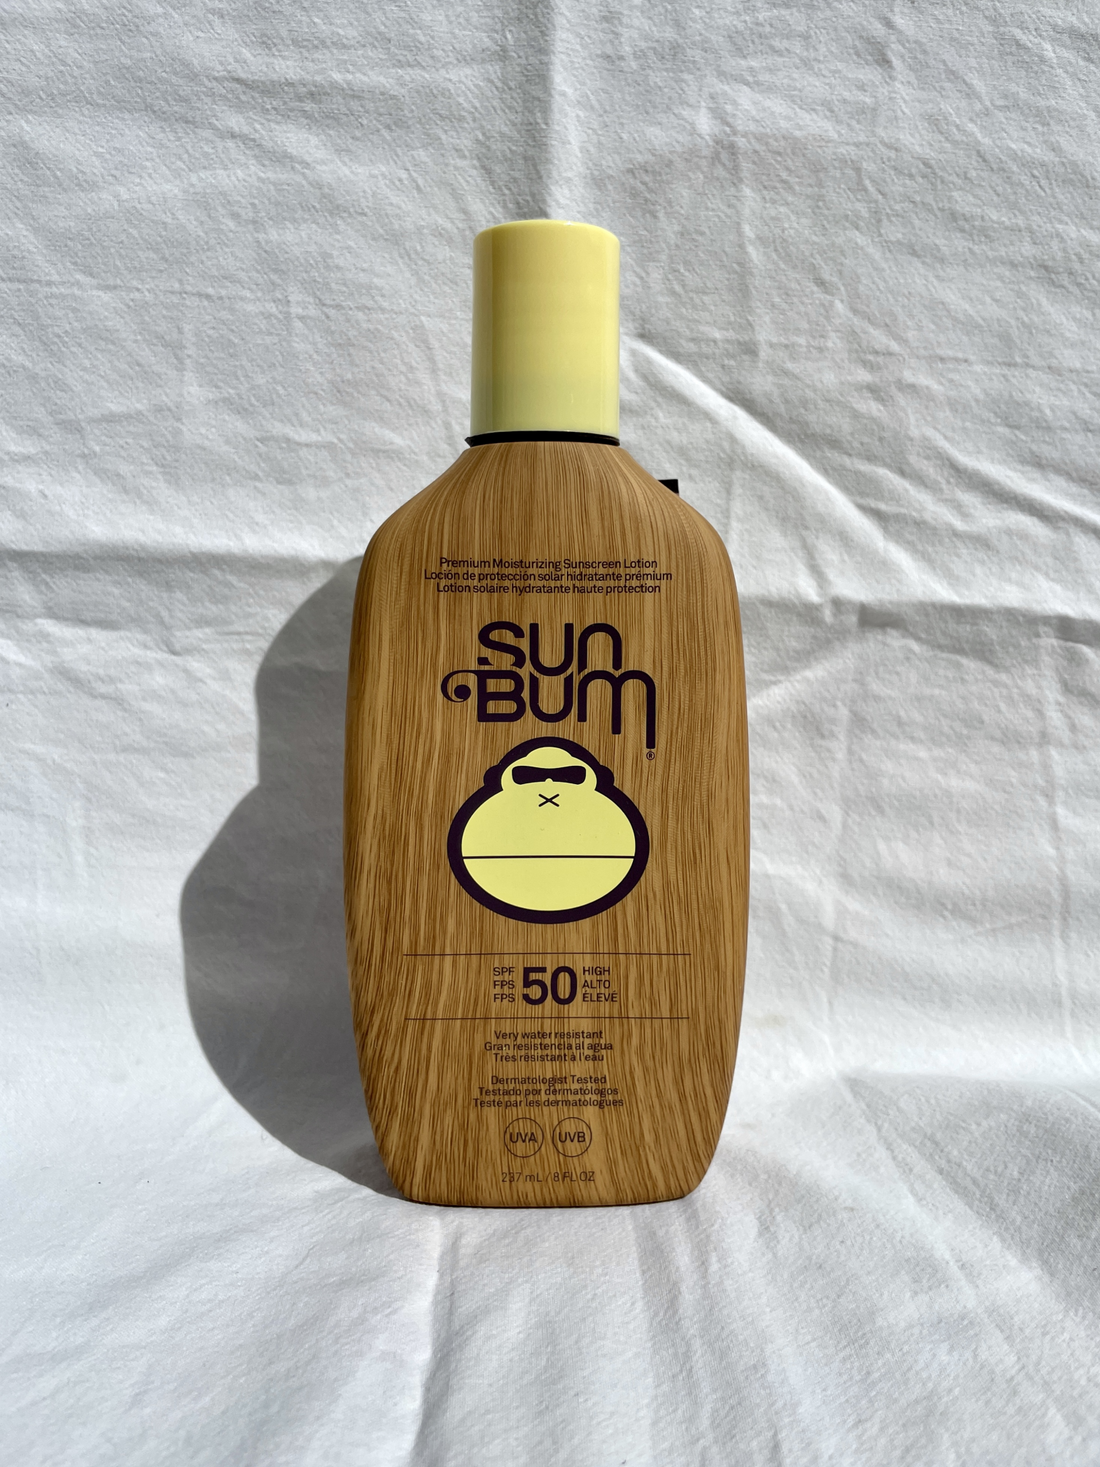 Premium Moisturizing Sunscreen Lotion, SPF50